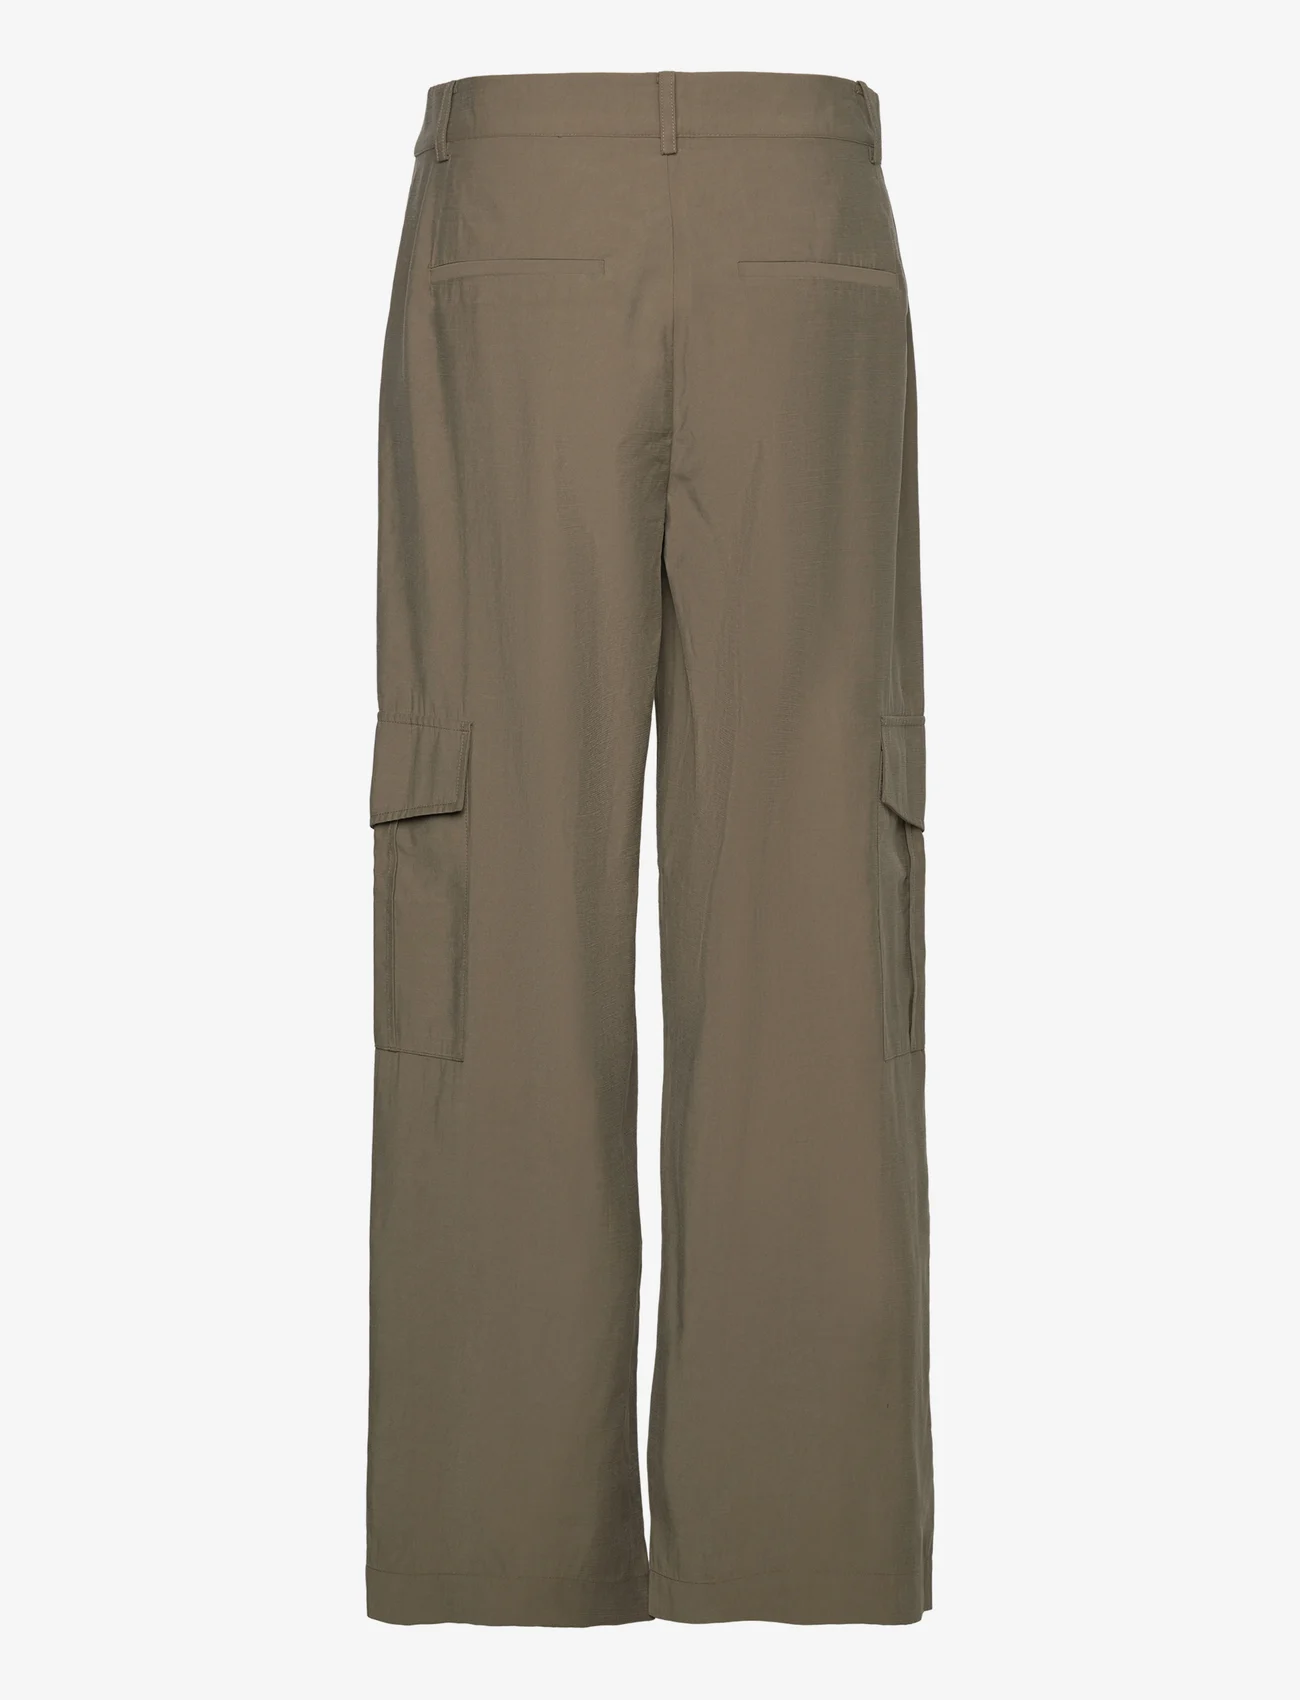 Nümph - NUWALERIA PANTS - cargo pants - ivy green - 1